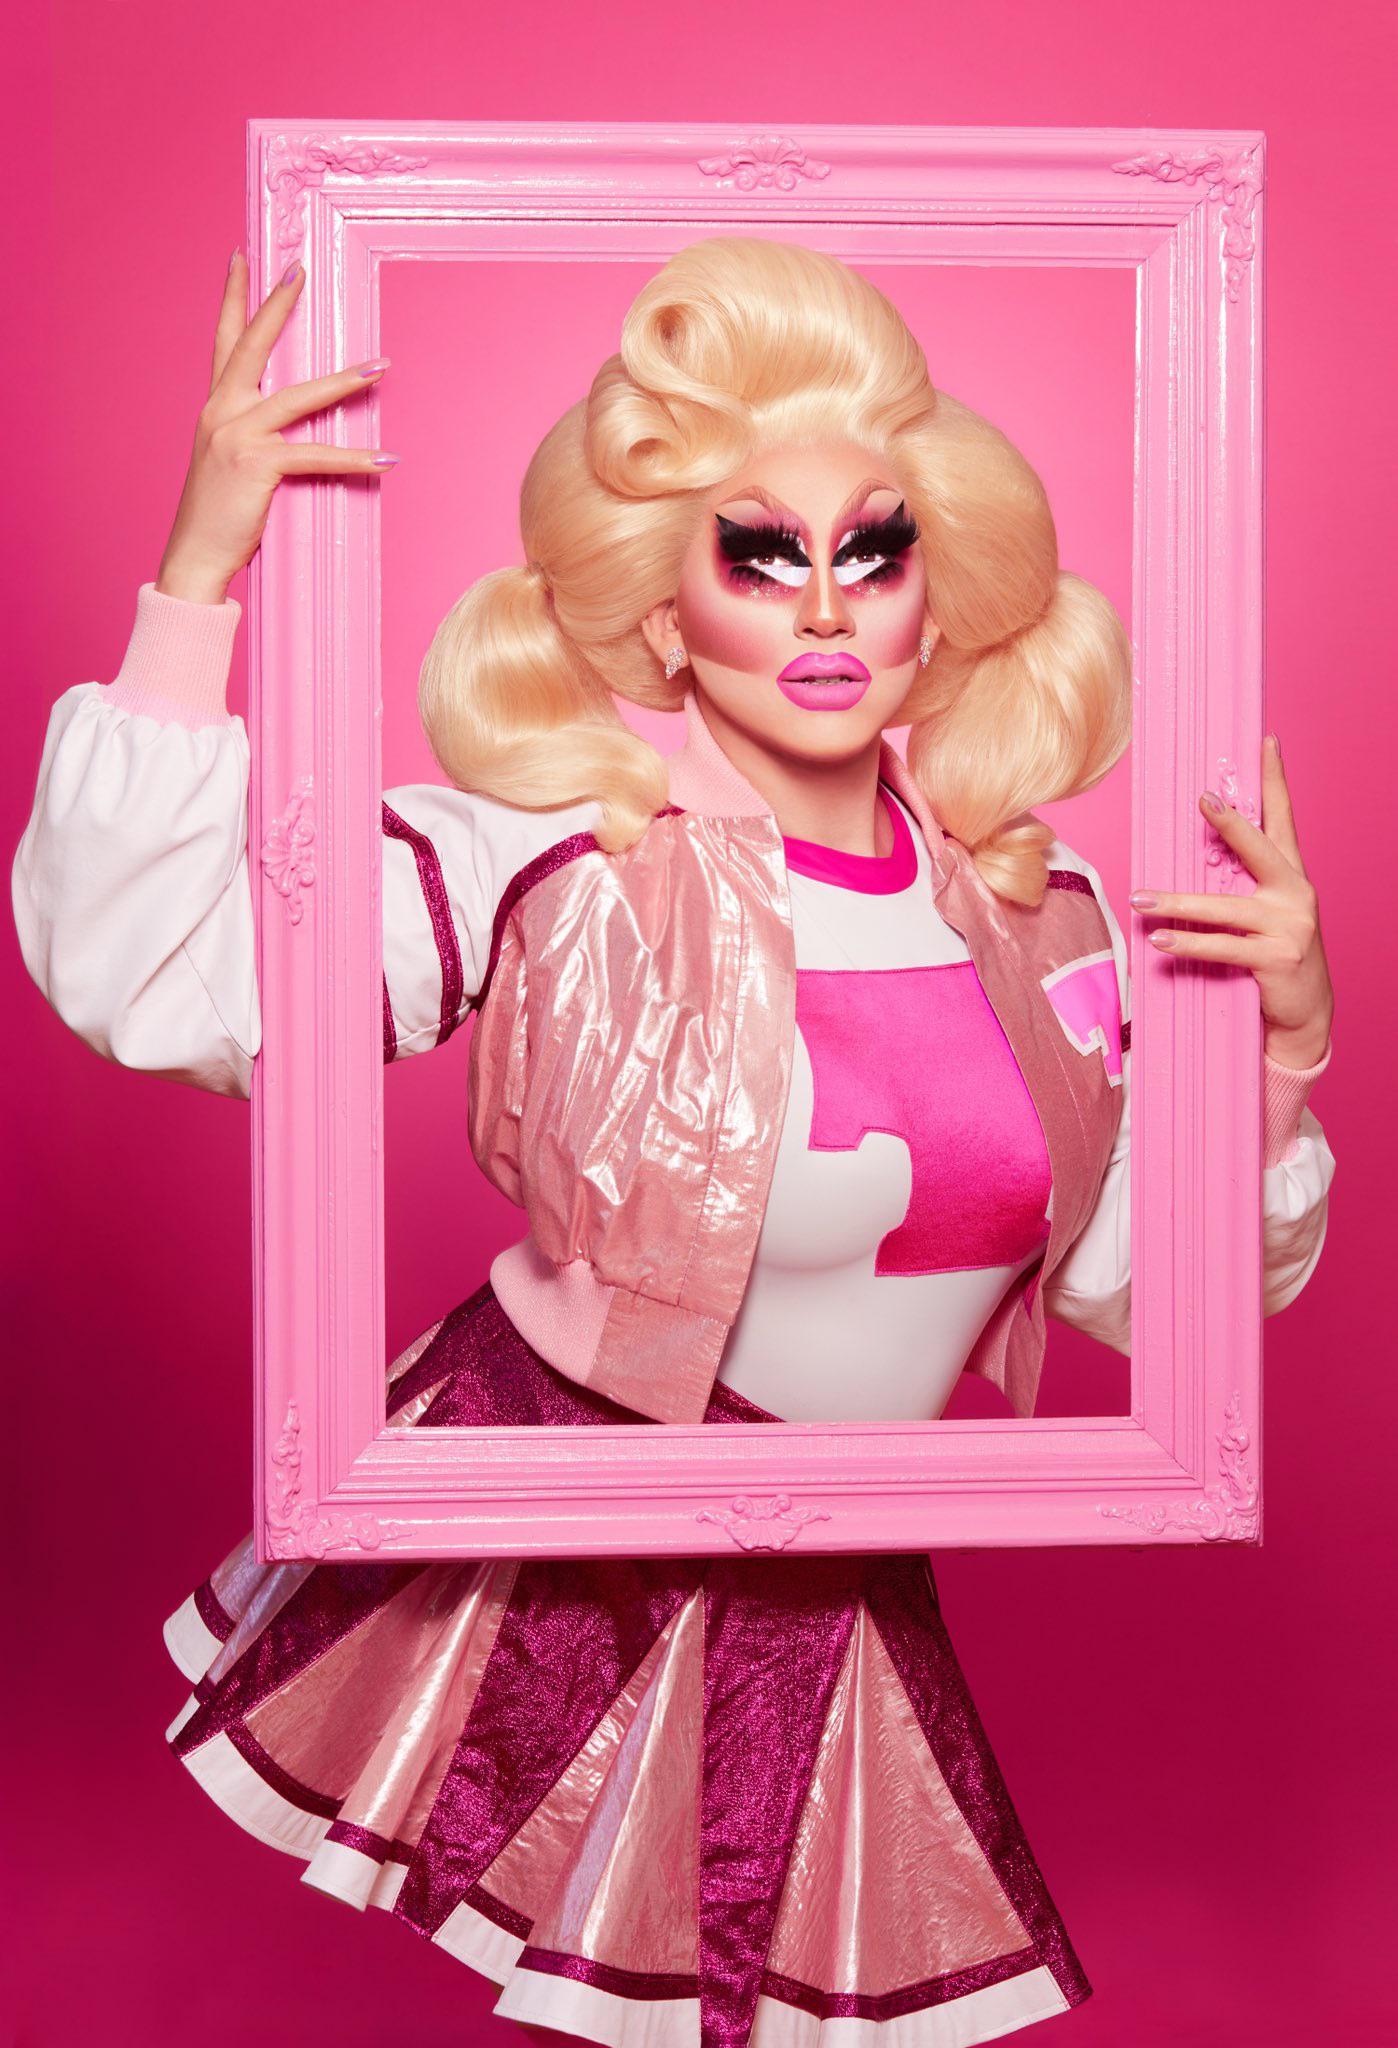 Trixie Mattel living her pink fantasy